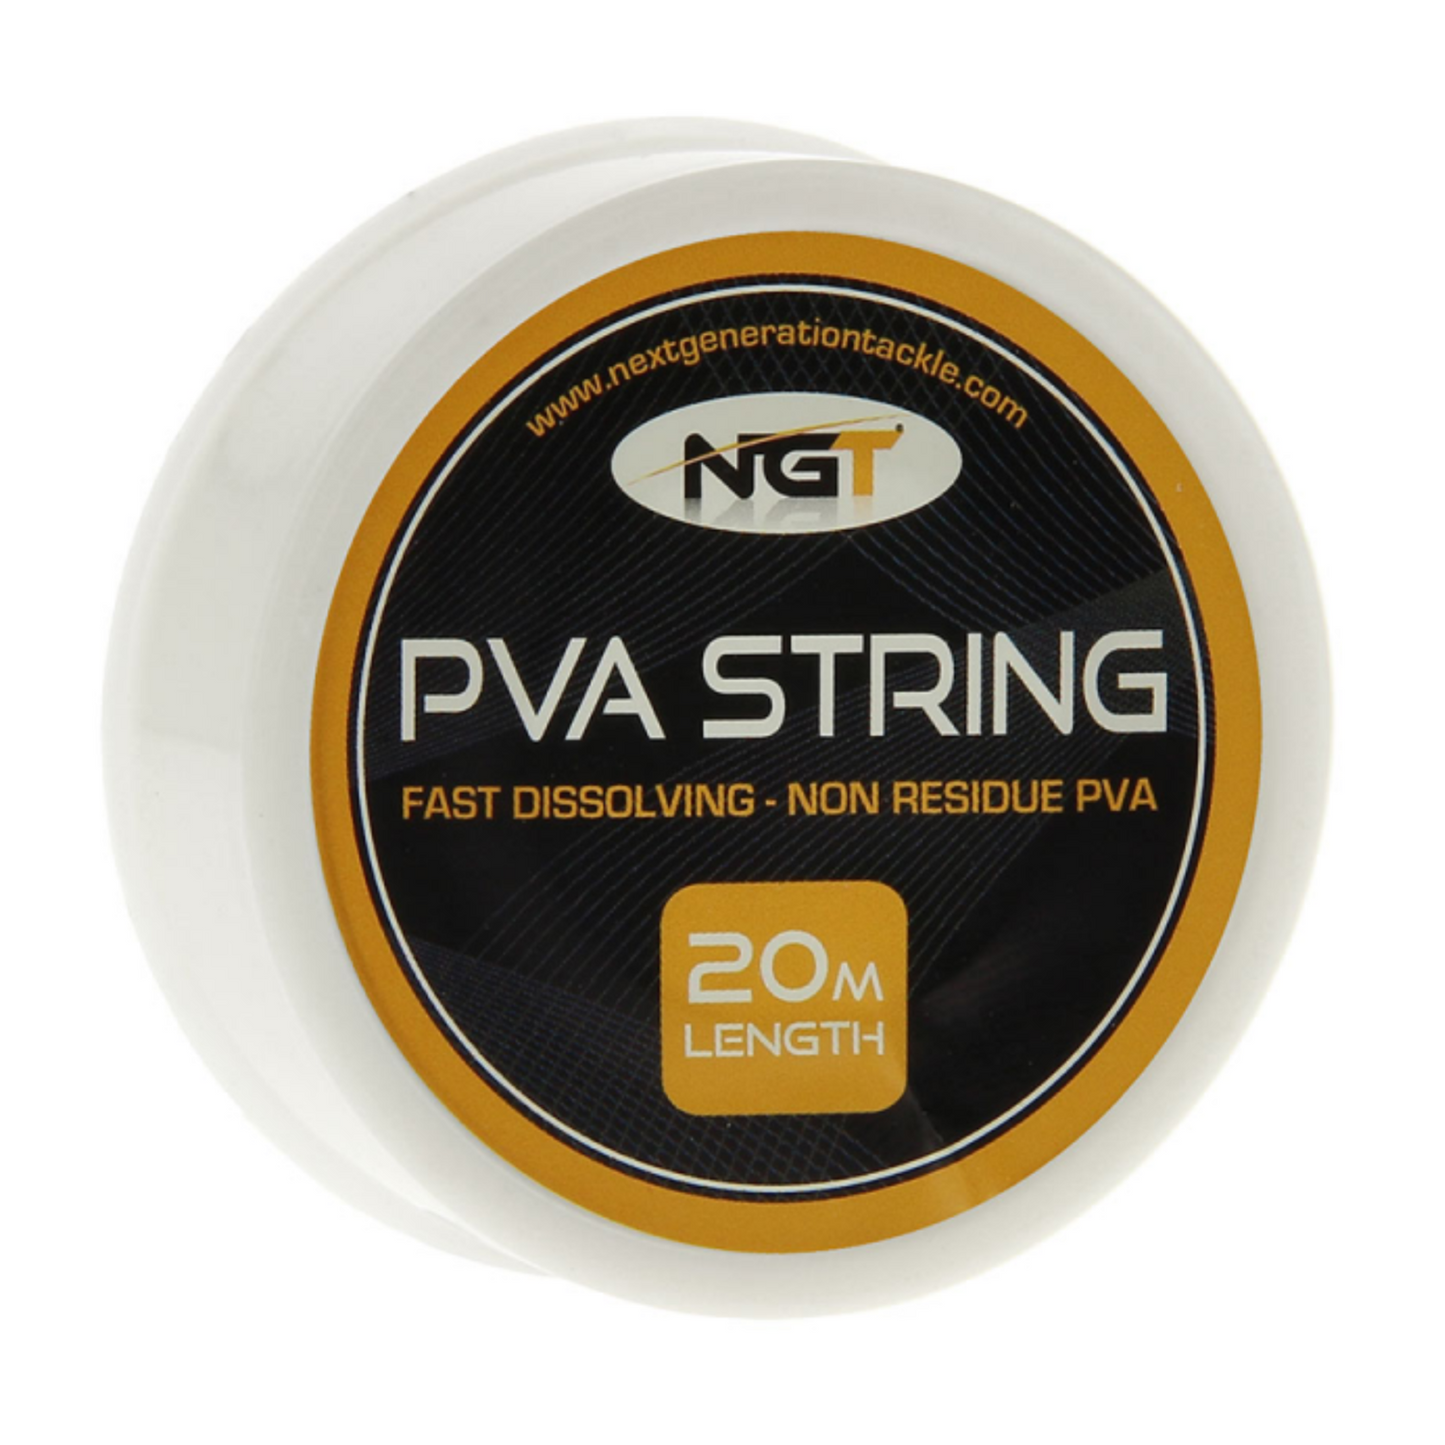 NGT PVA String Dispenser (20M)